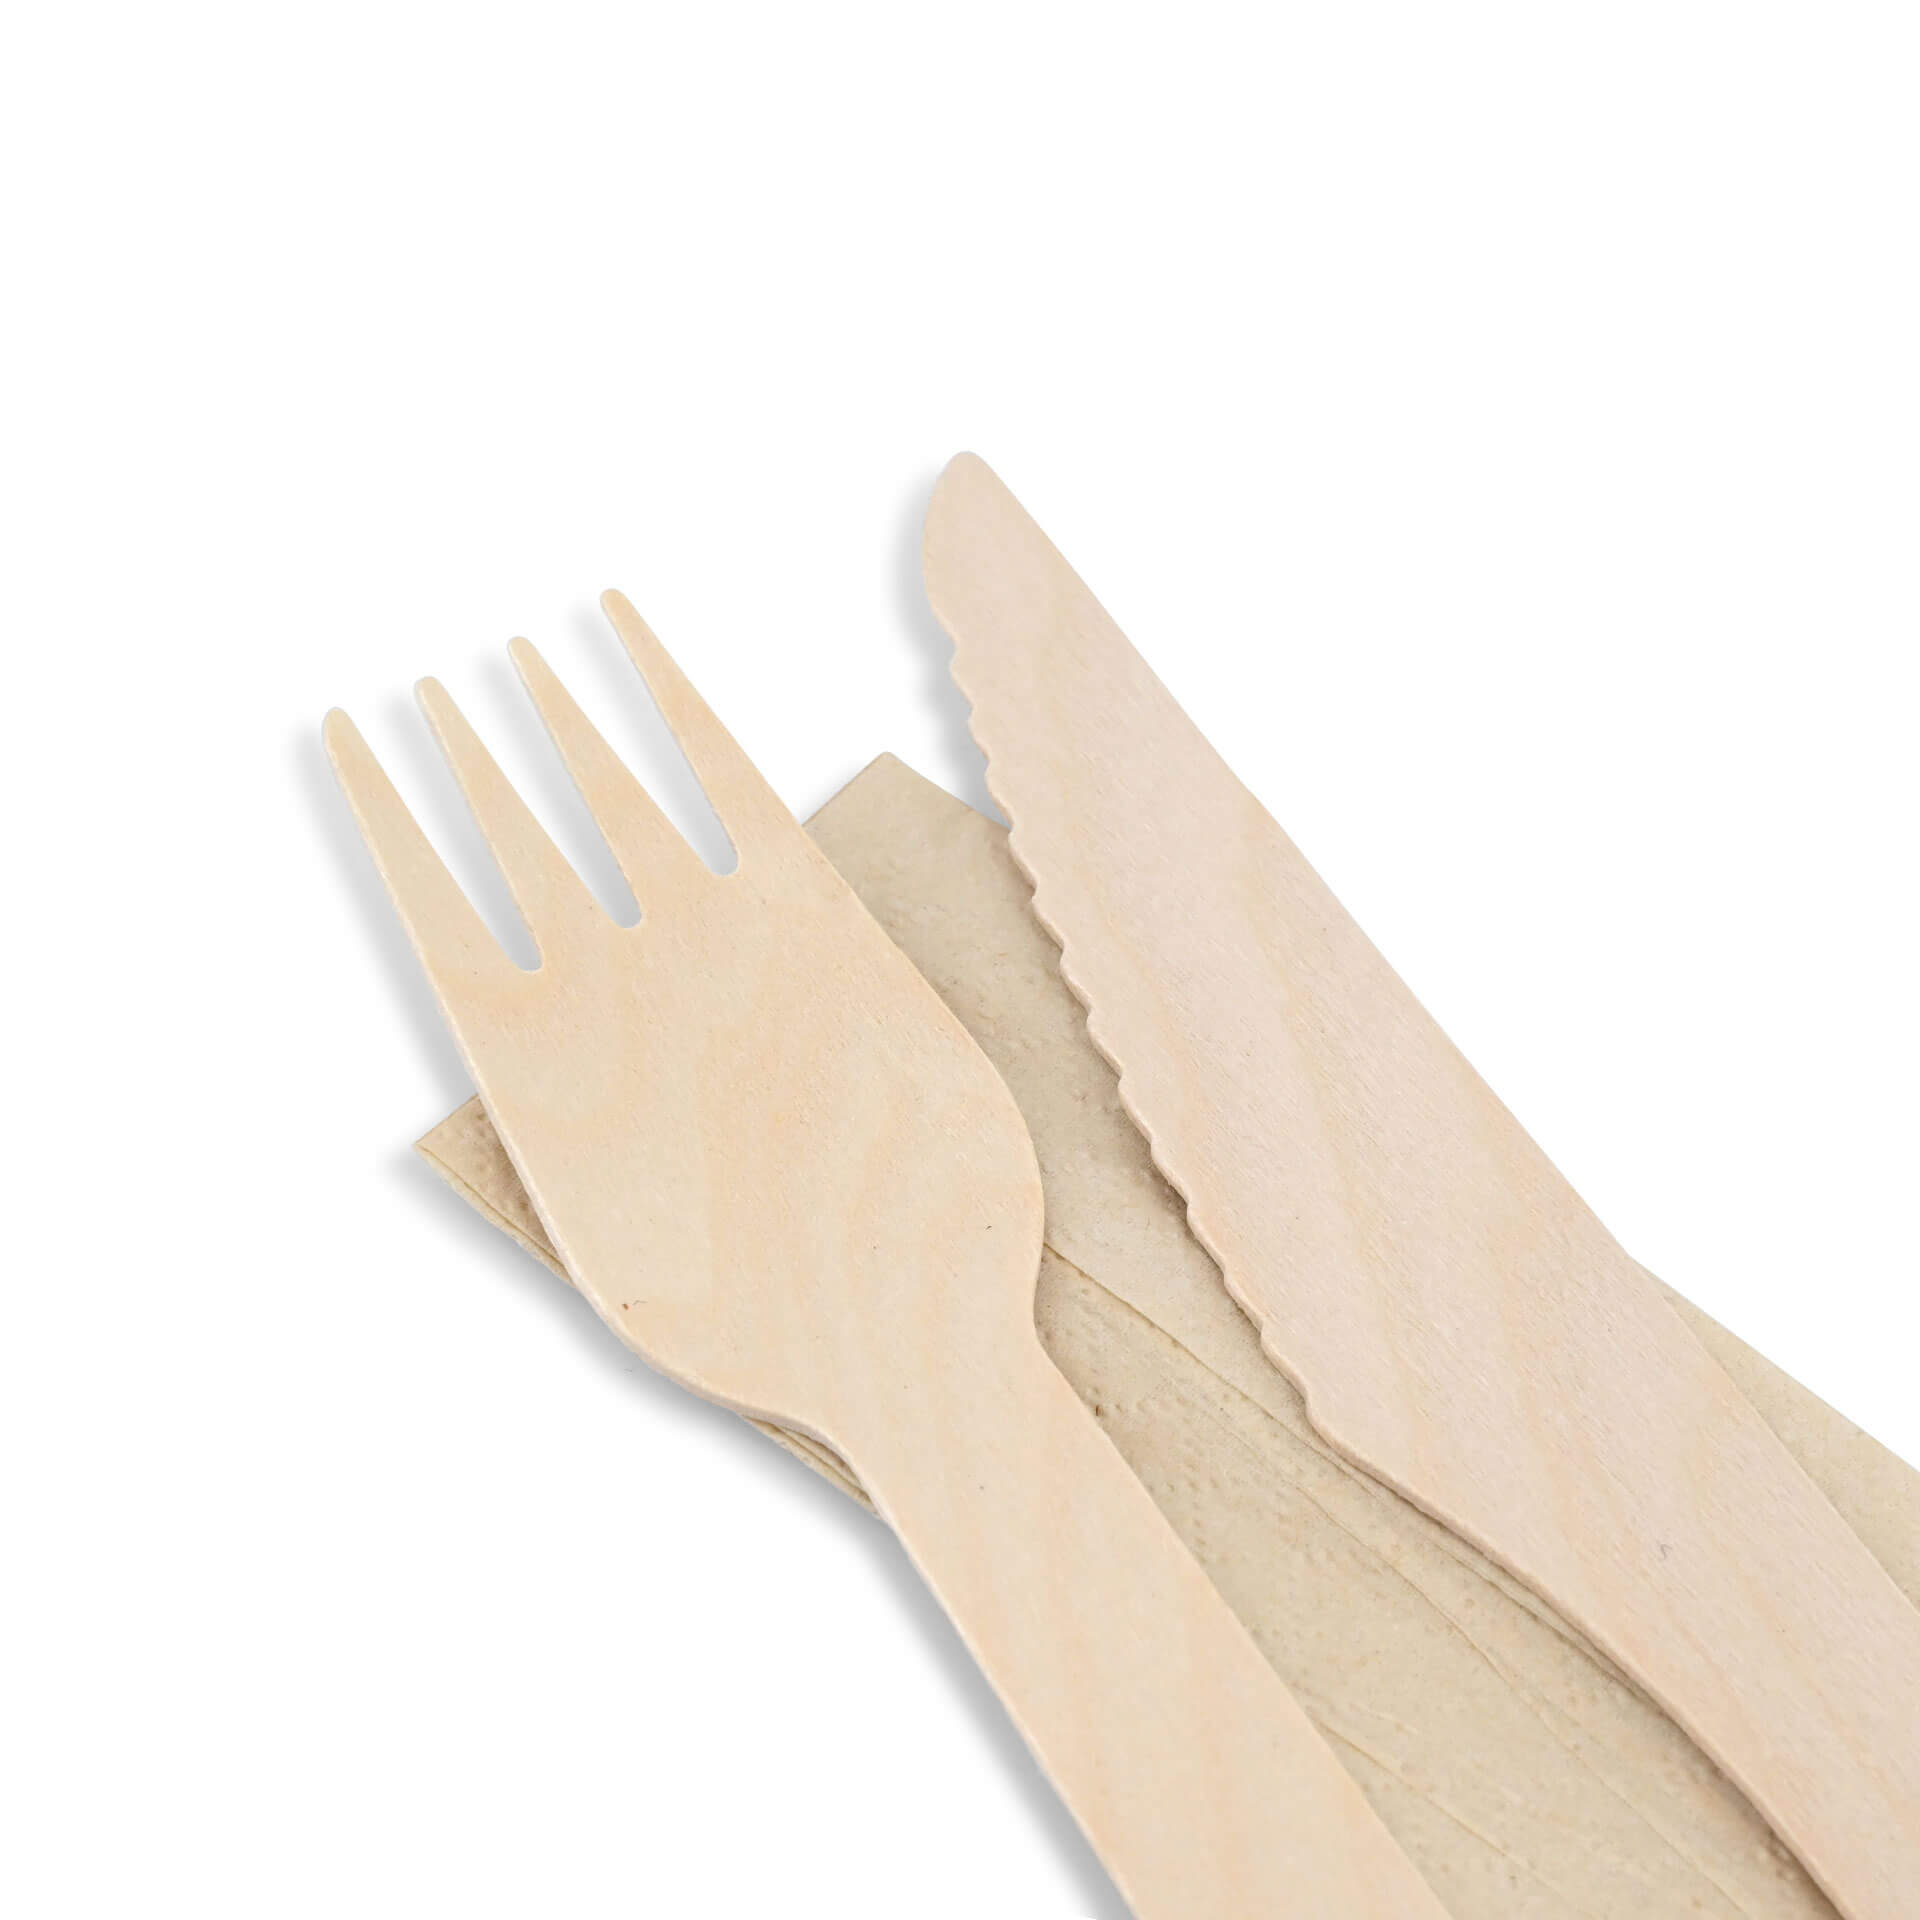 Holz-Besteck-Sets Messer, Gabel & Serviette, 16 cm, biobeschichtet